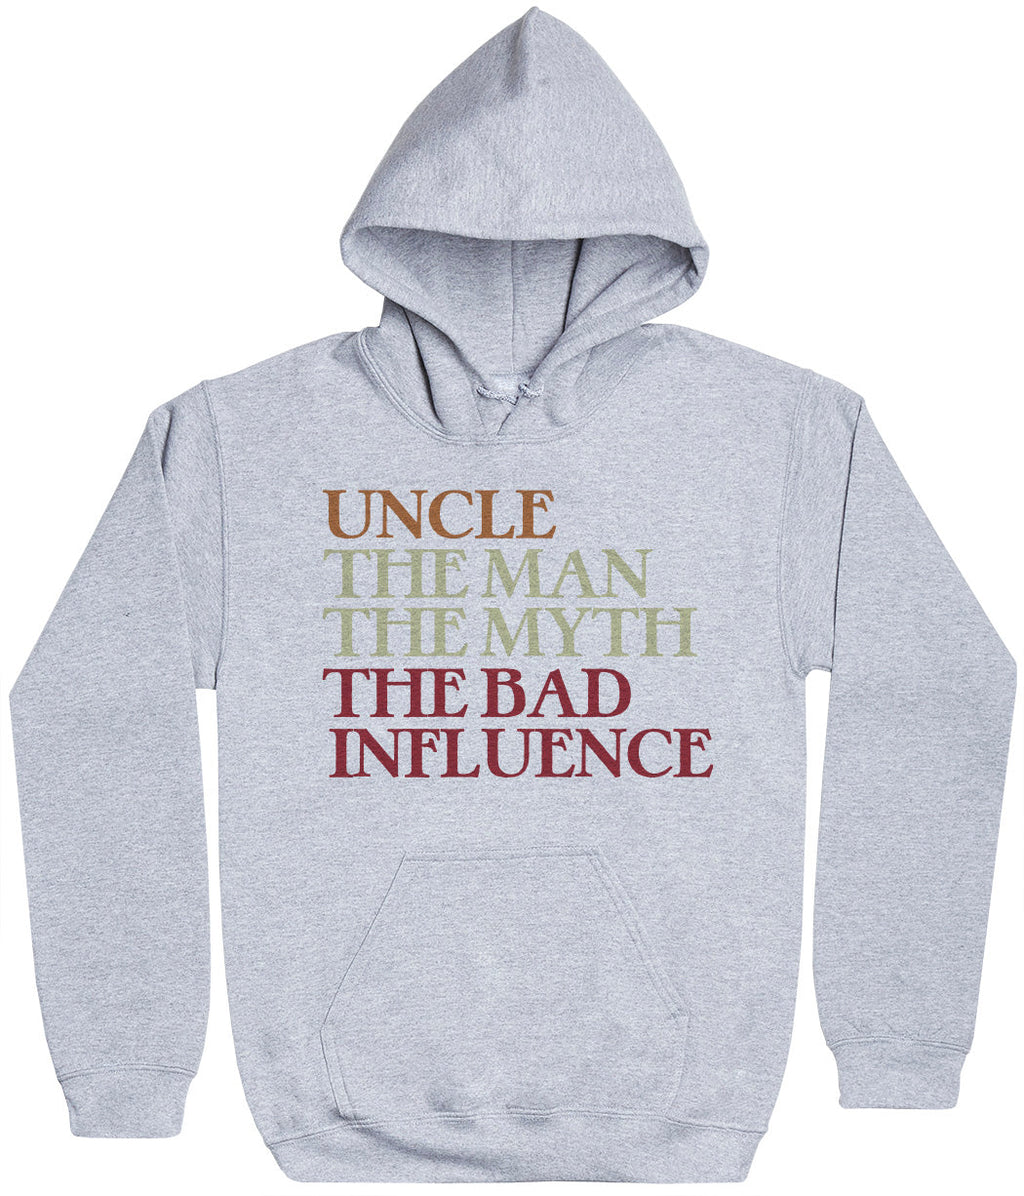 Uncle Man Myth Bad Influence - Mens Hoodie (6574689452081)